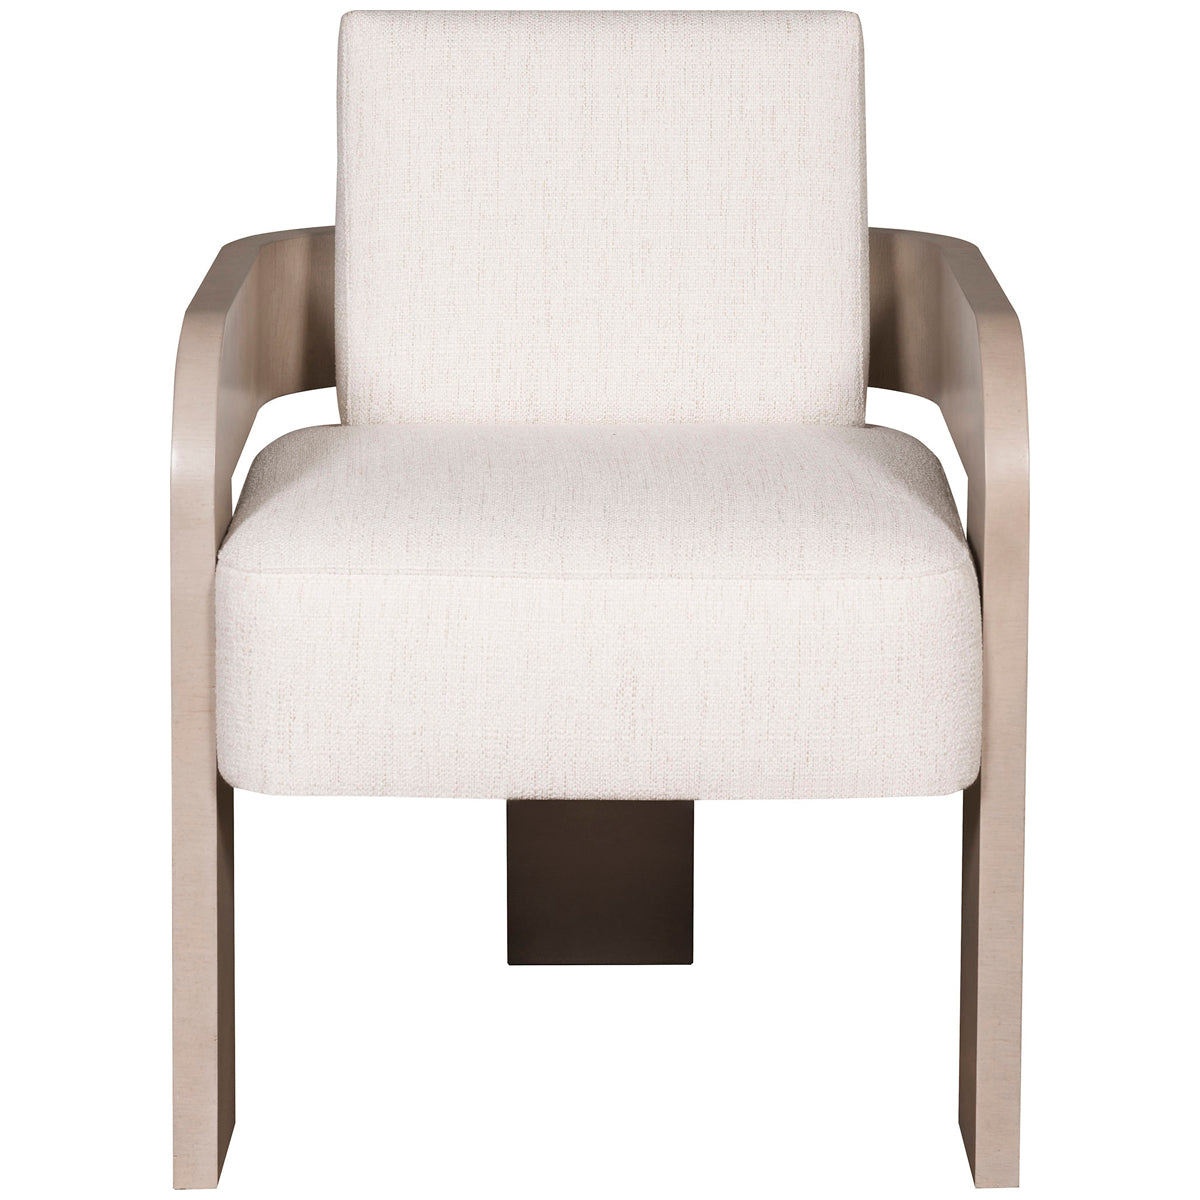 Vanguard Furniture Form Arm Chair - Kizzie Natural